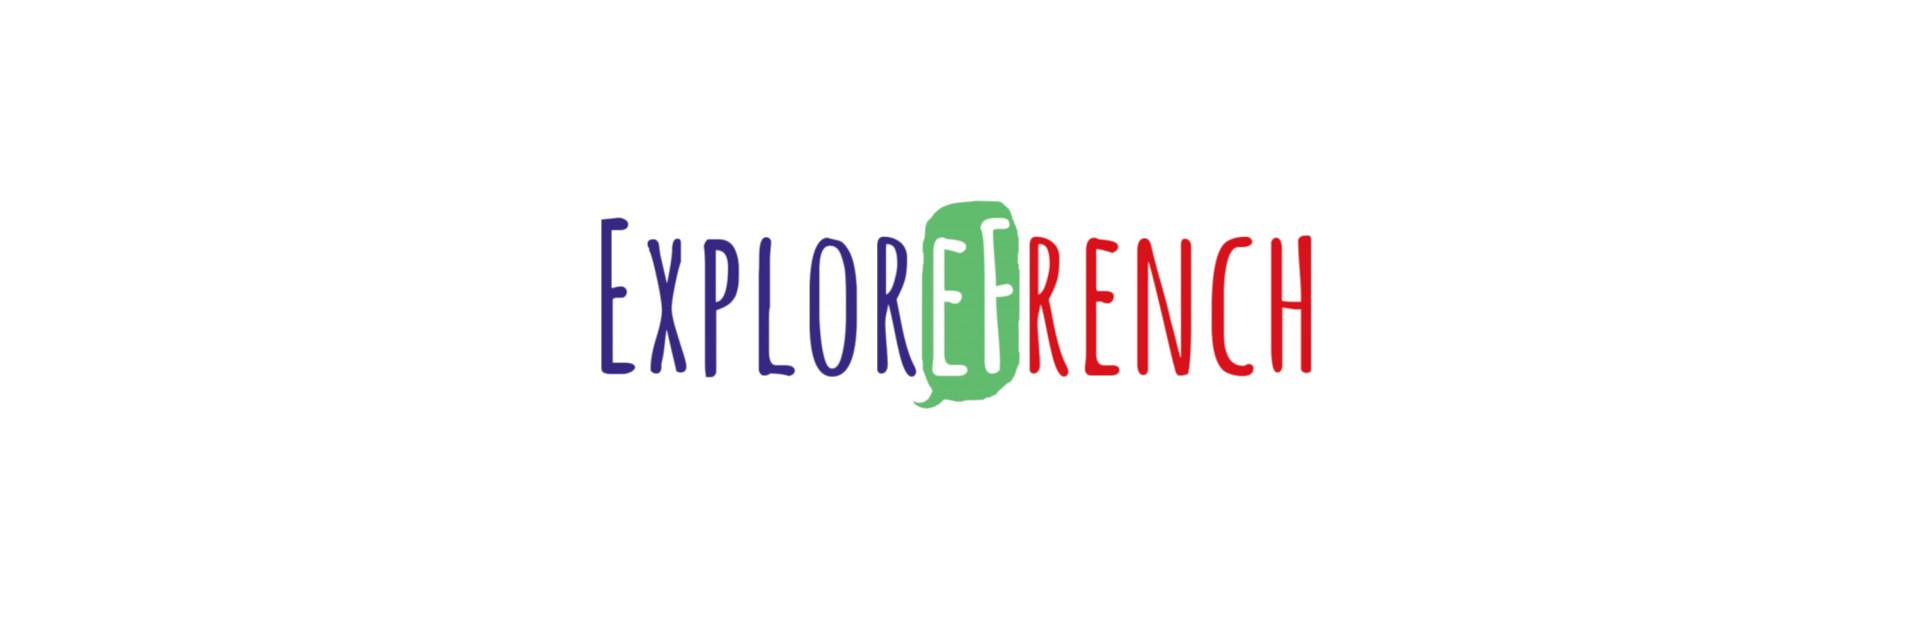 Explore French